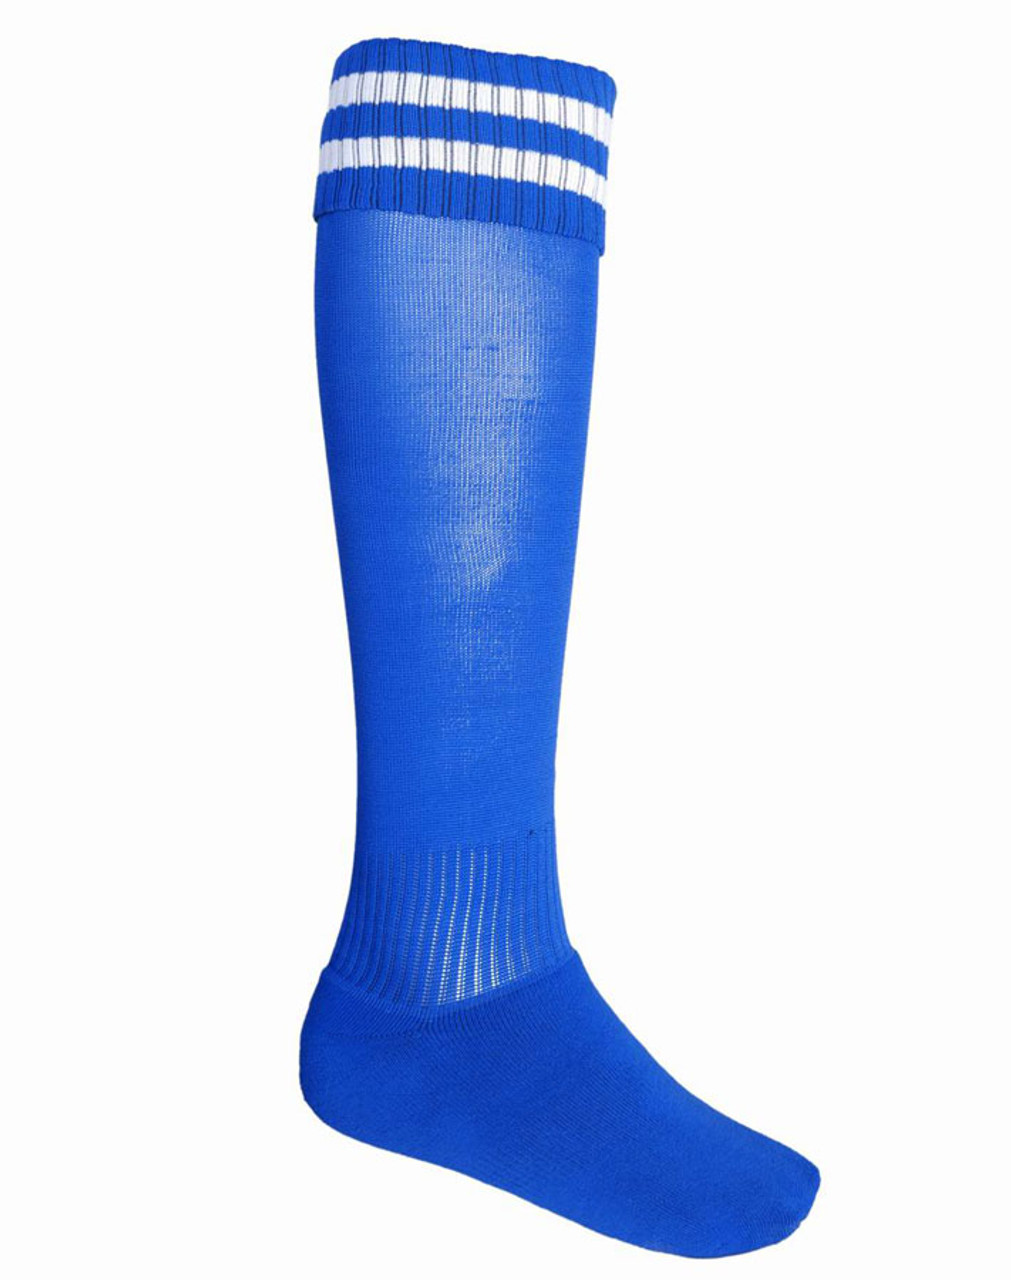 Shop Adult Long Unisex Sport Knee High Socks